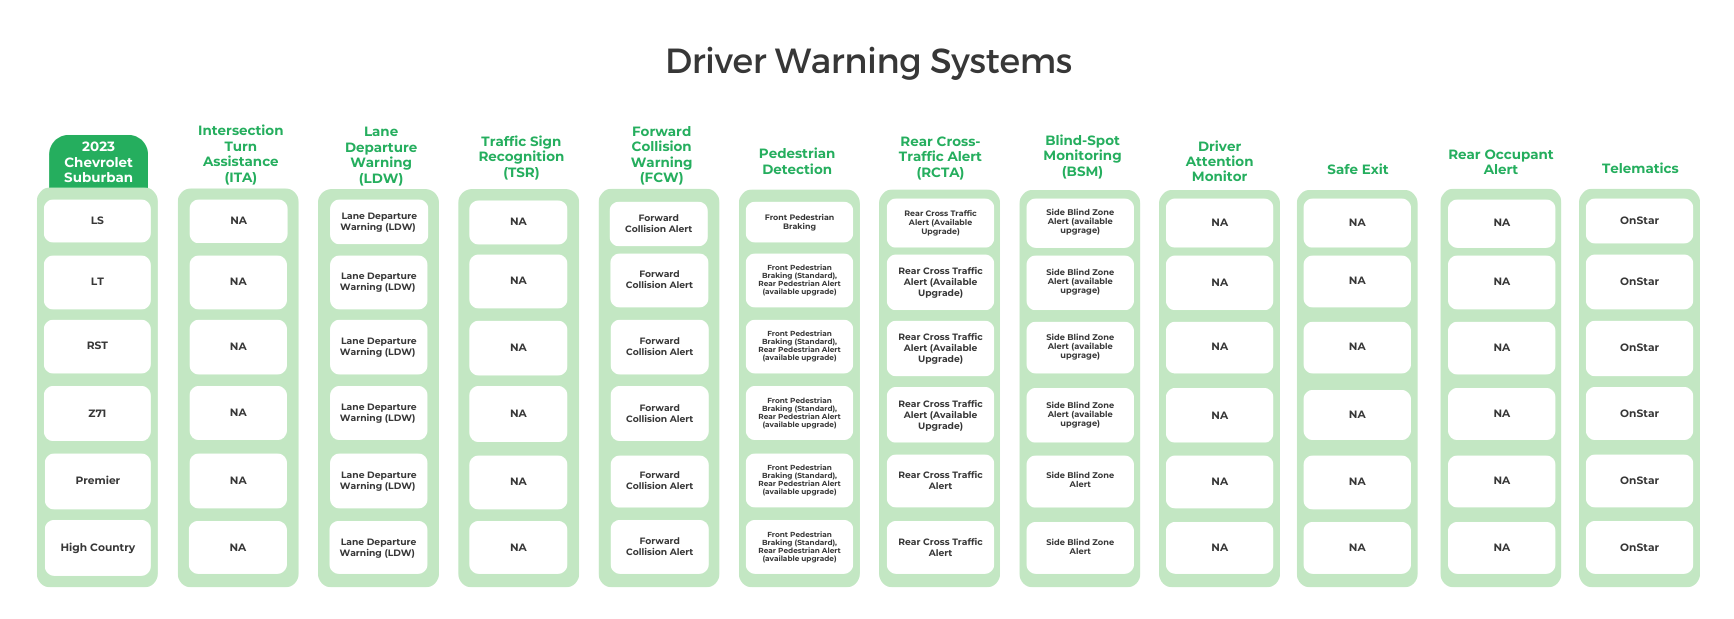 2023 Chevrolet Suburban Driver Warning Systems